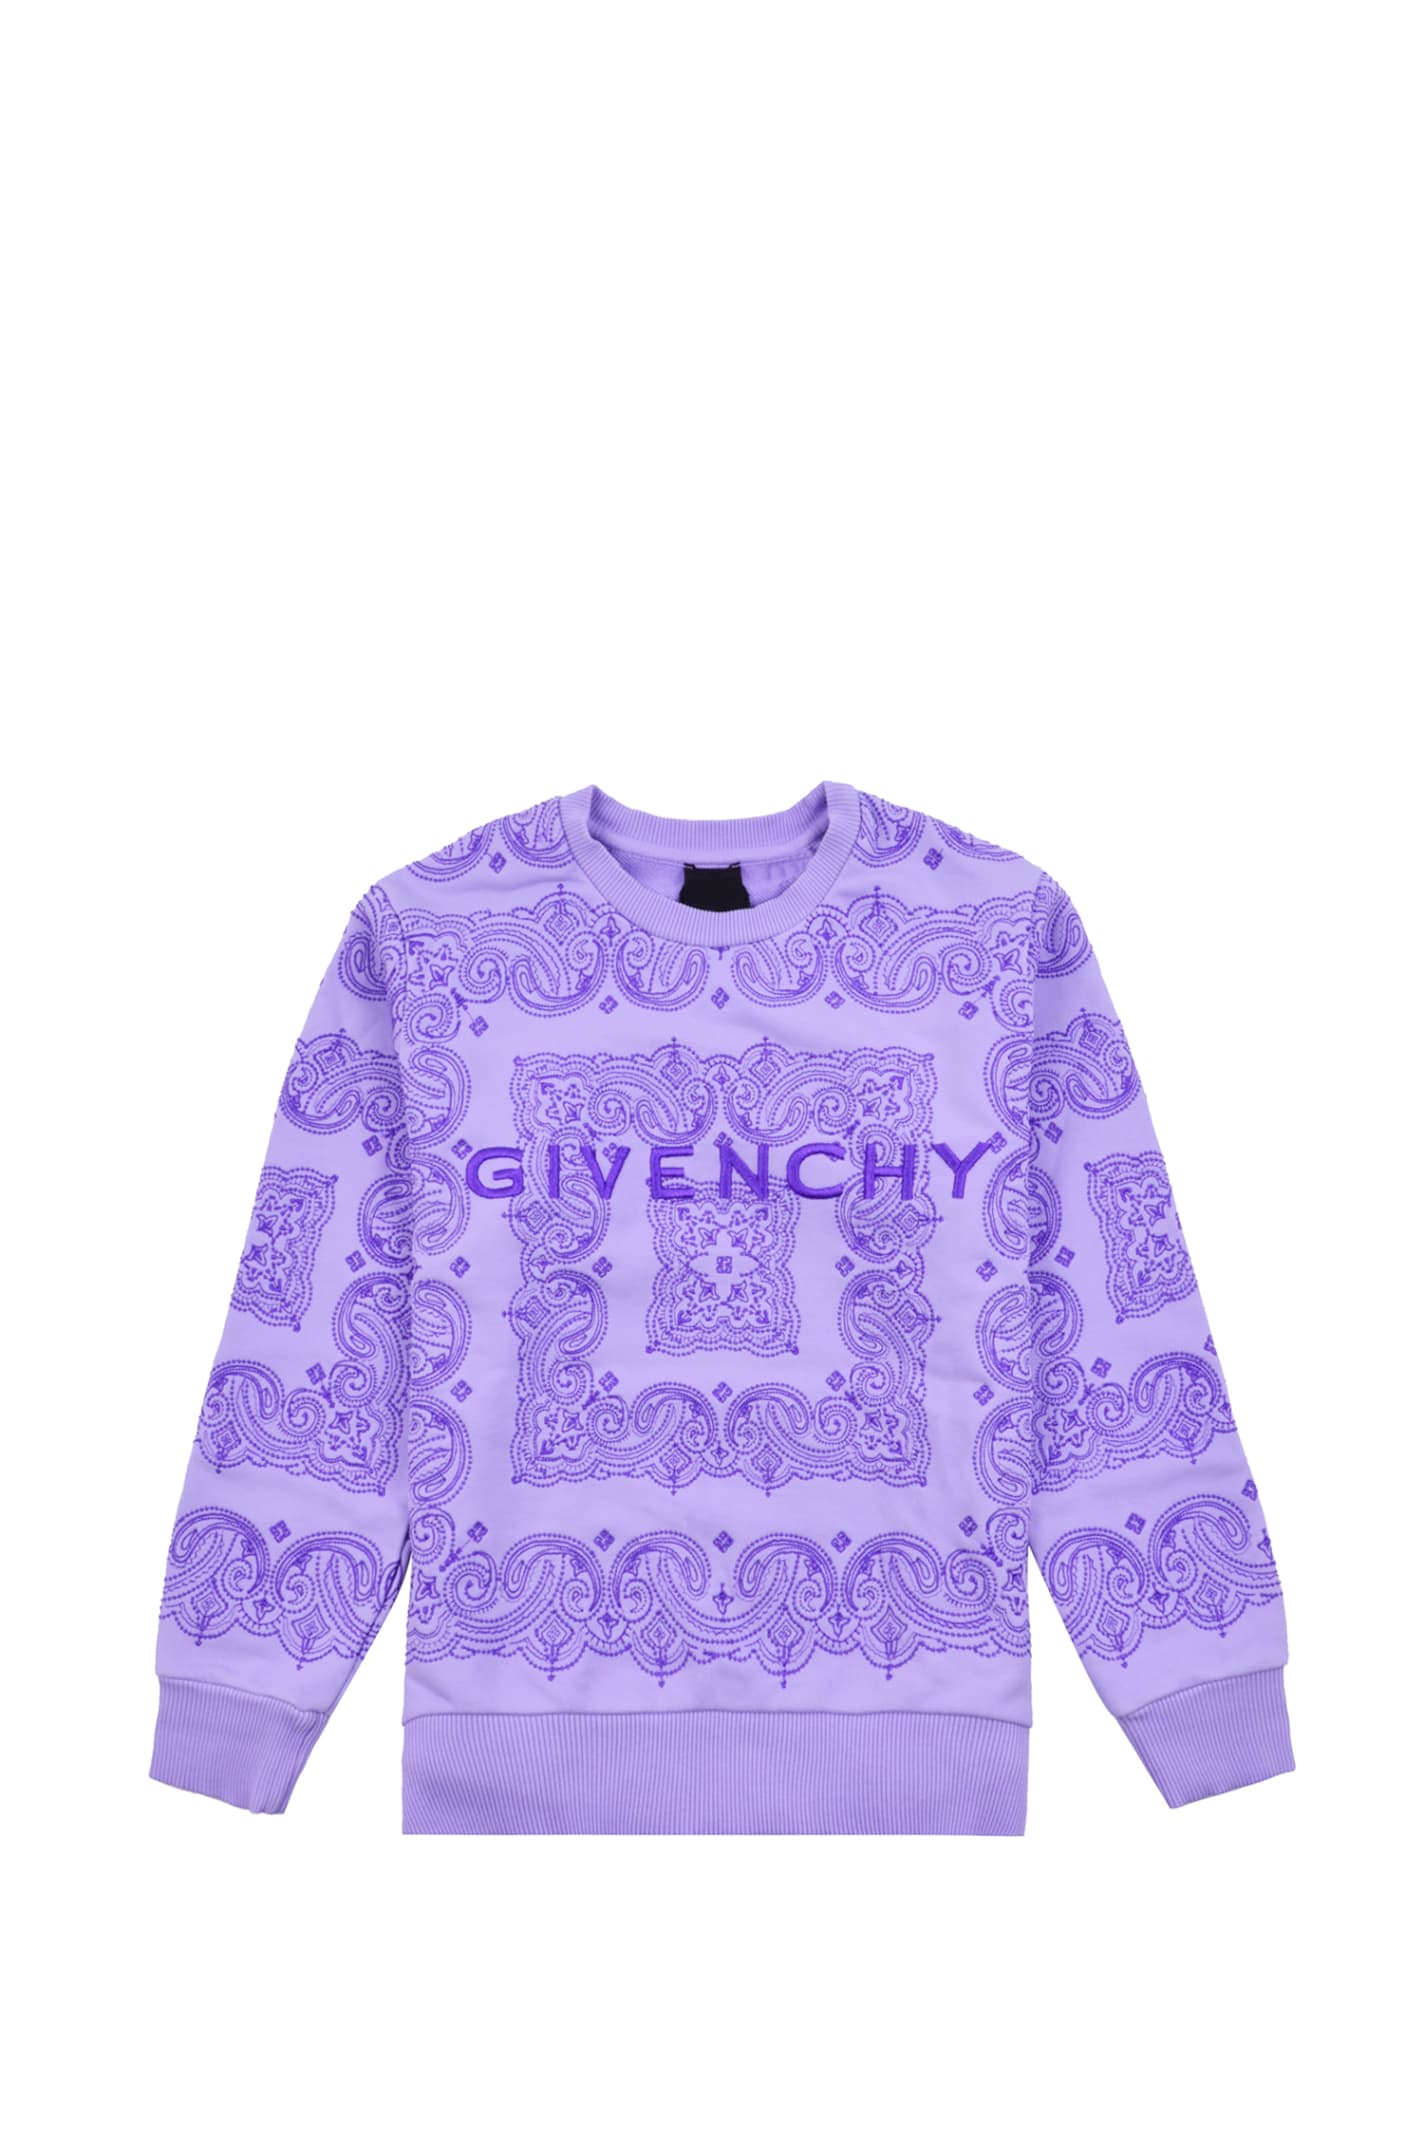 Givenchy Sweatshirt With Bandana Embroidery